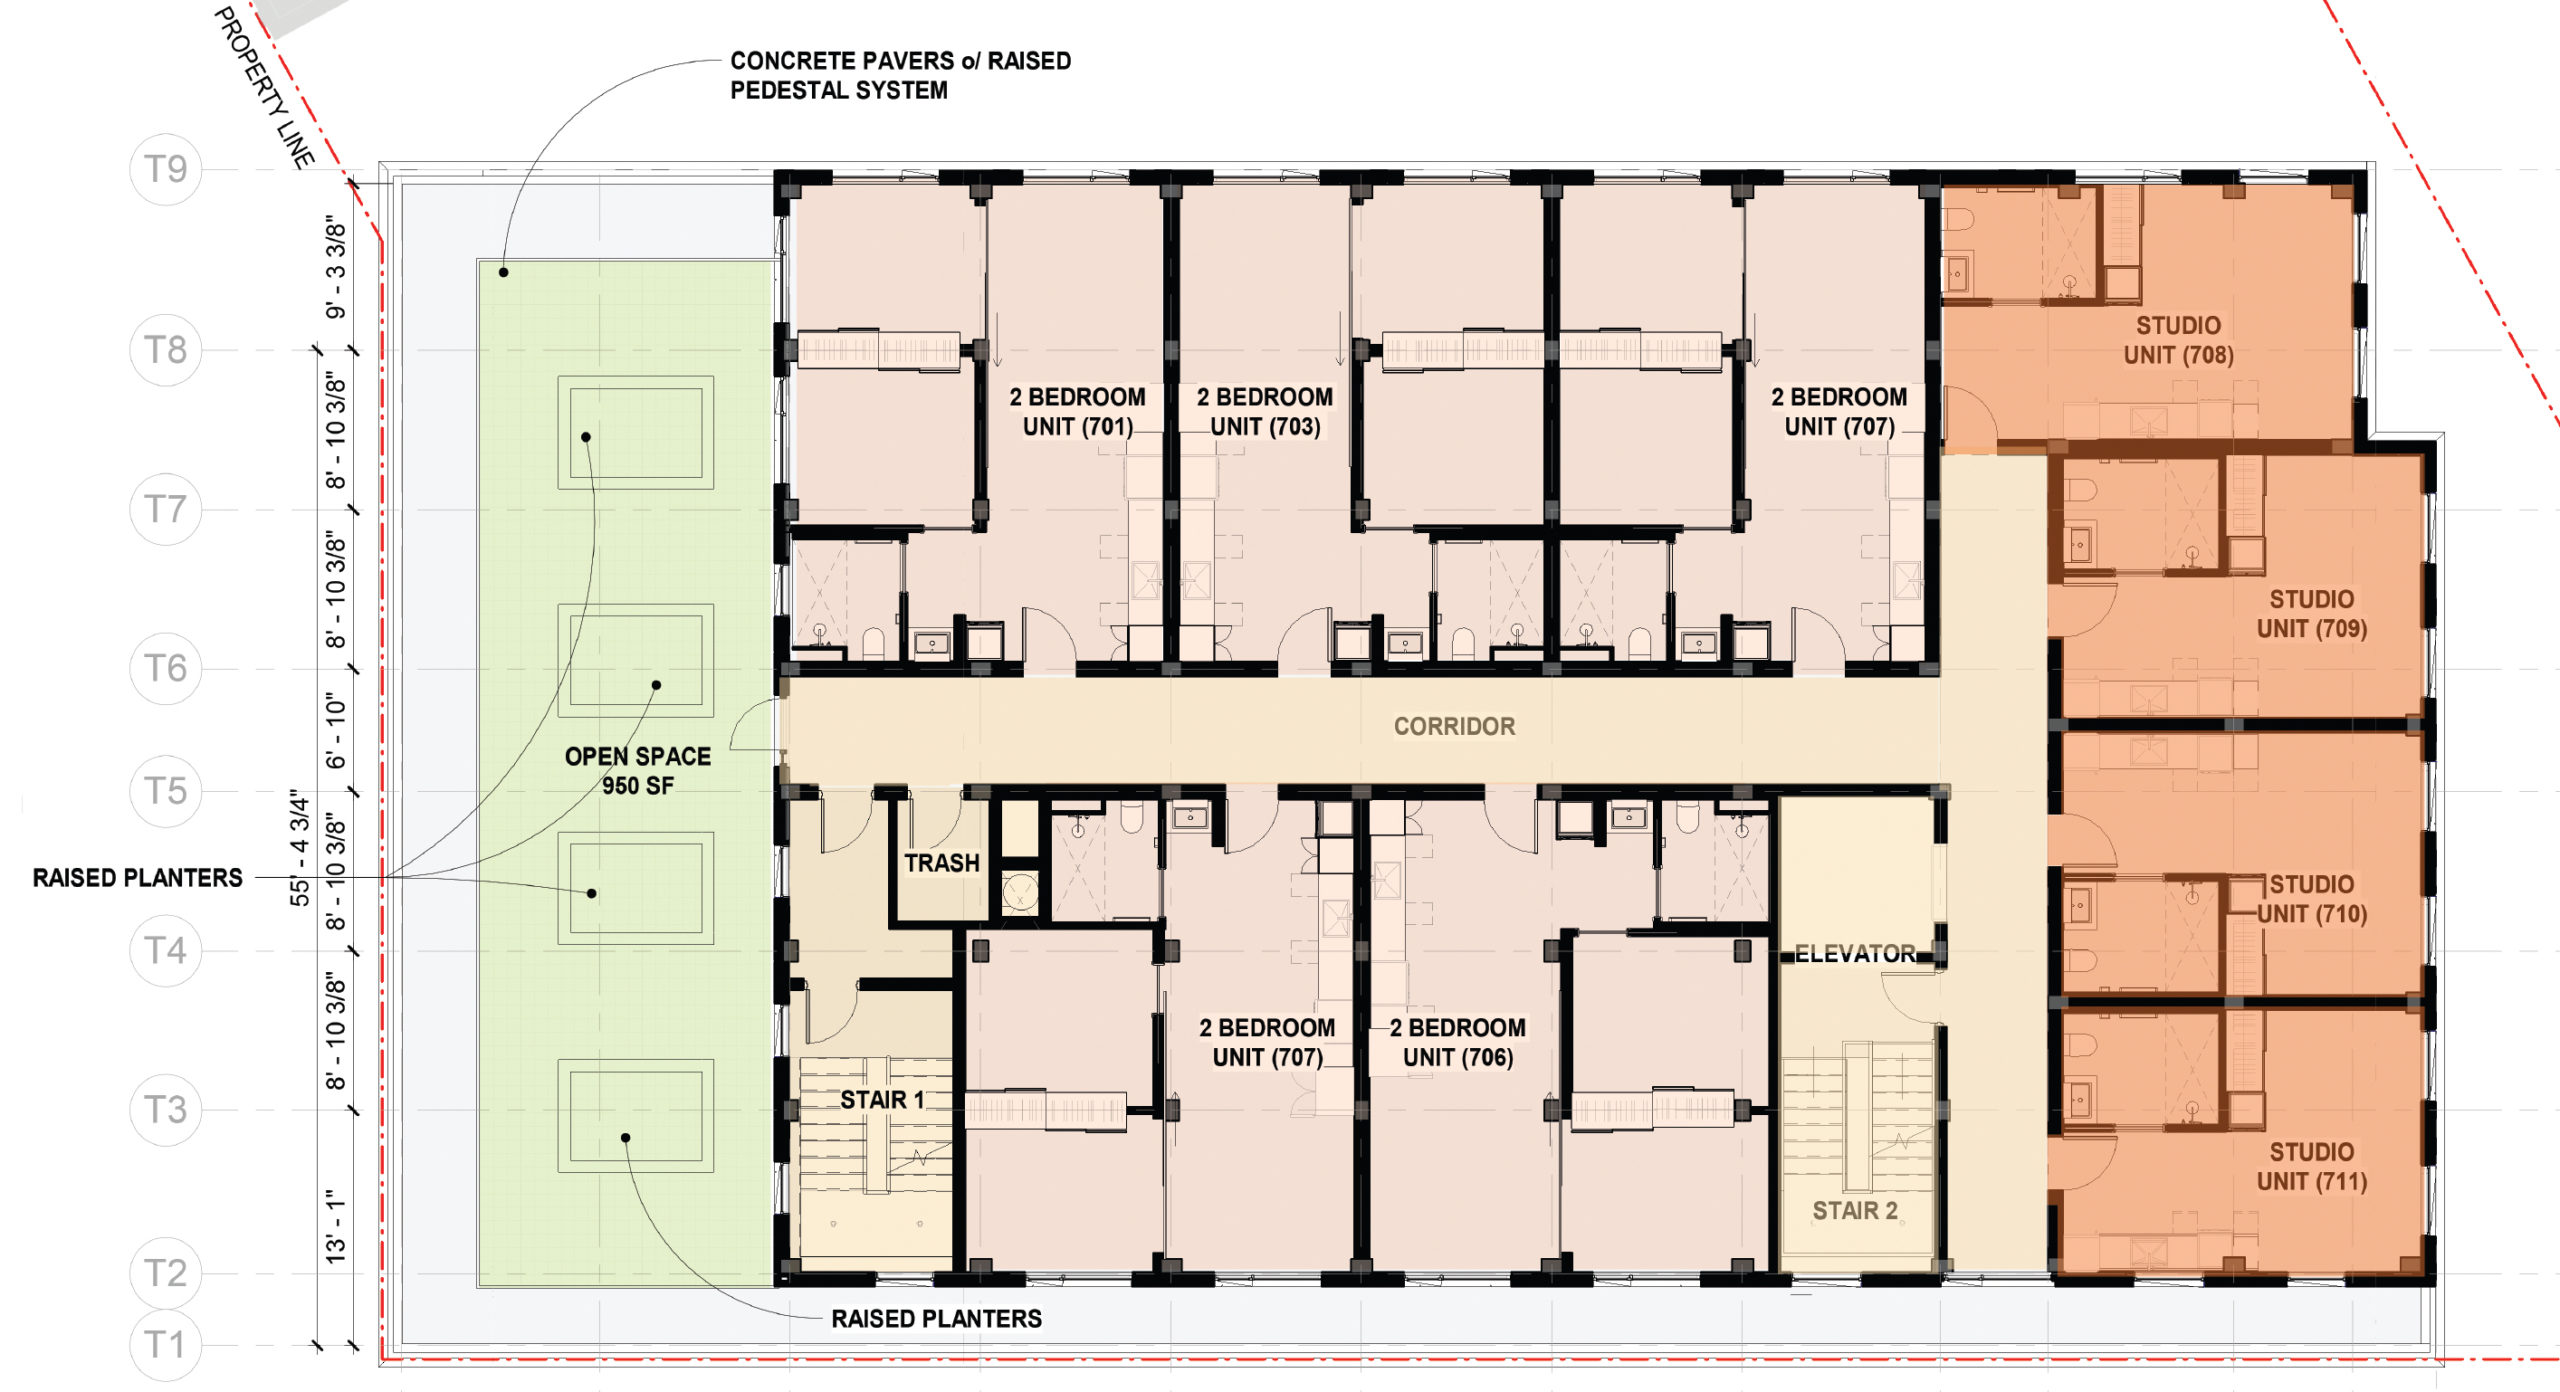 3403 Piedmont Avenue seventh-level floor plan, illustration by oWow